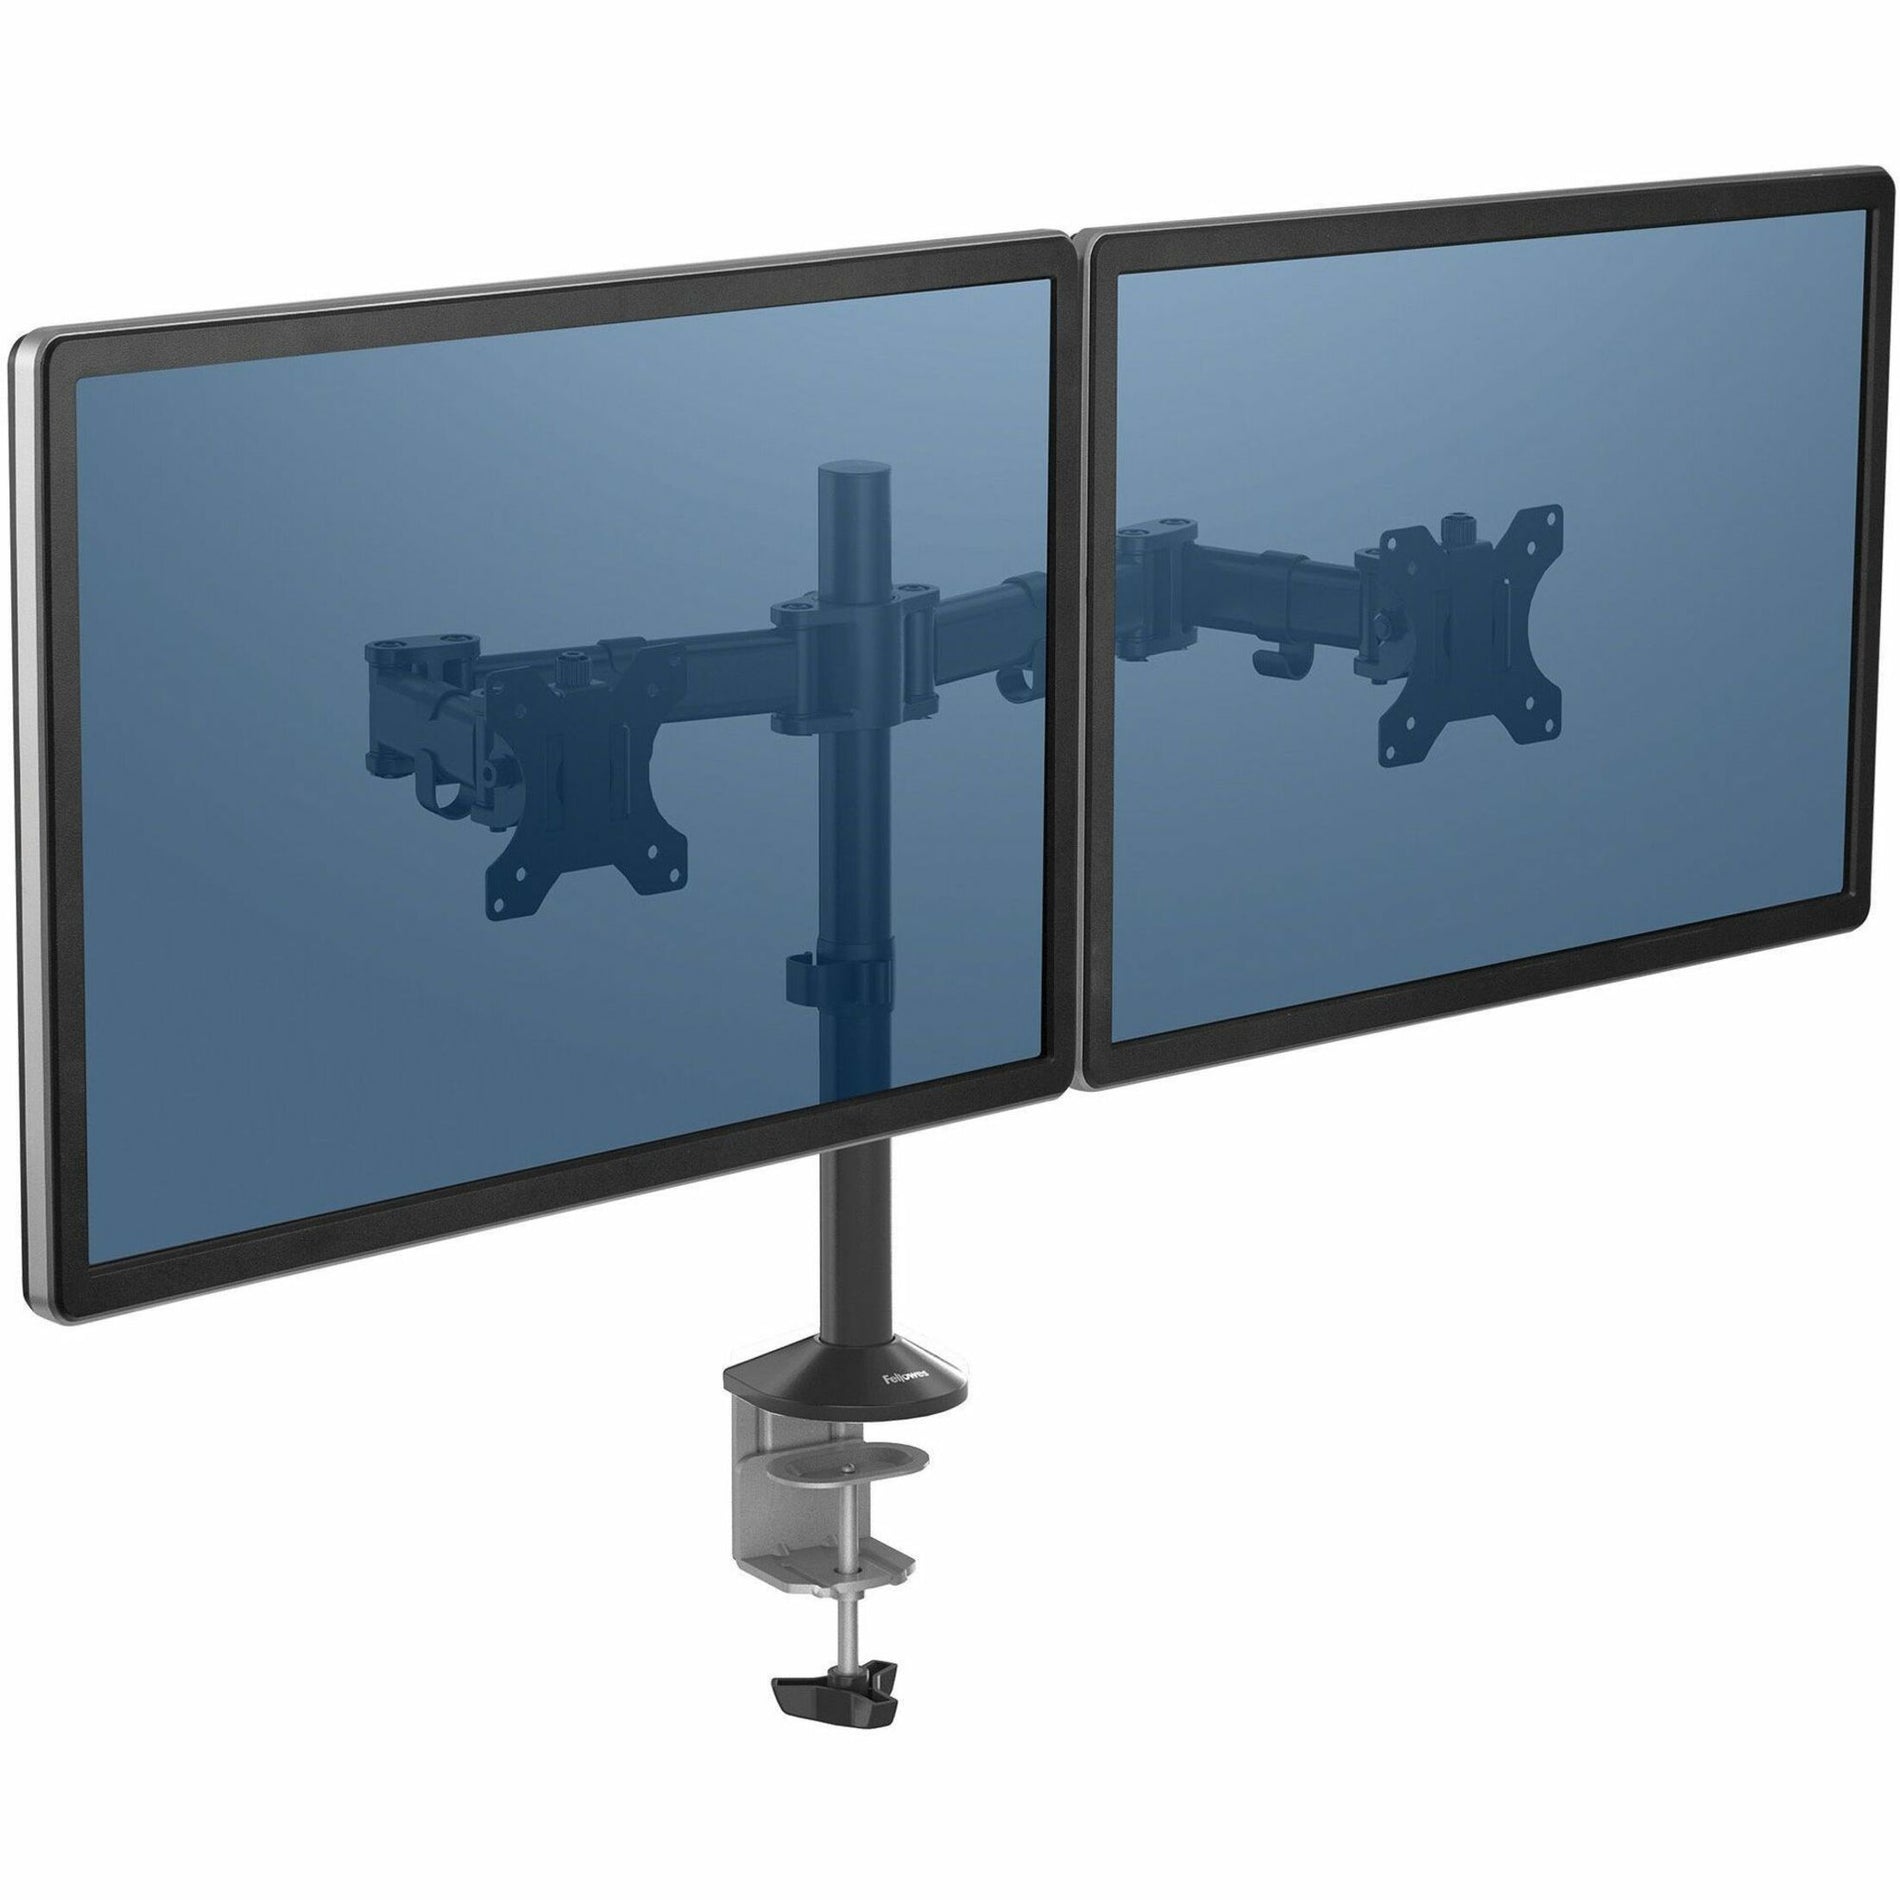 Fellowes 8502601 Reflex Dual Monitor Arm Desk Mount Supports 2 Monitors 48 lb Maximum Load Capacity